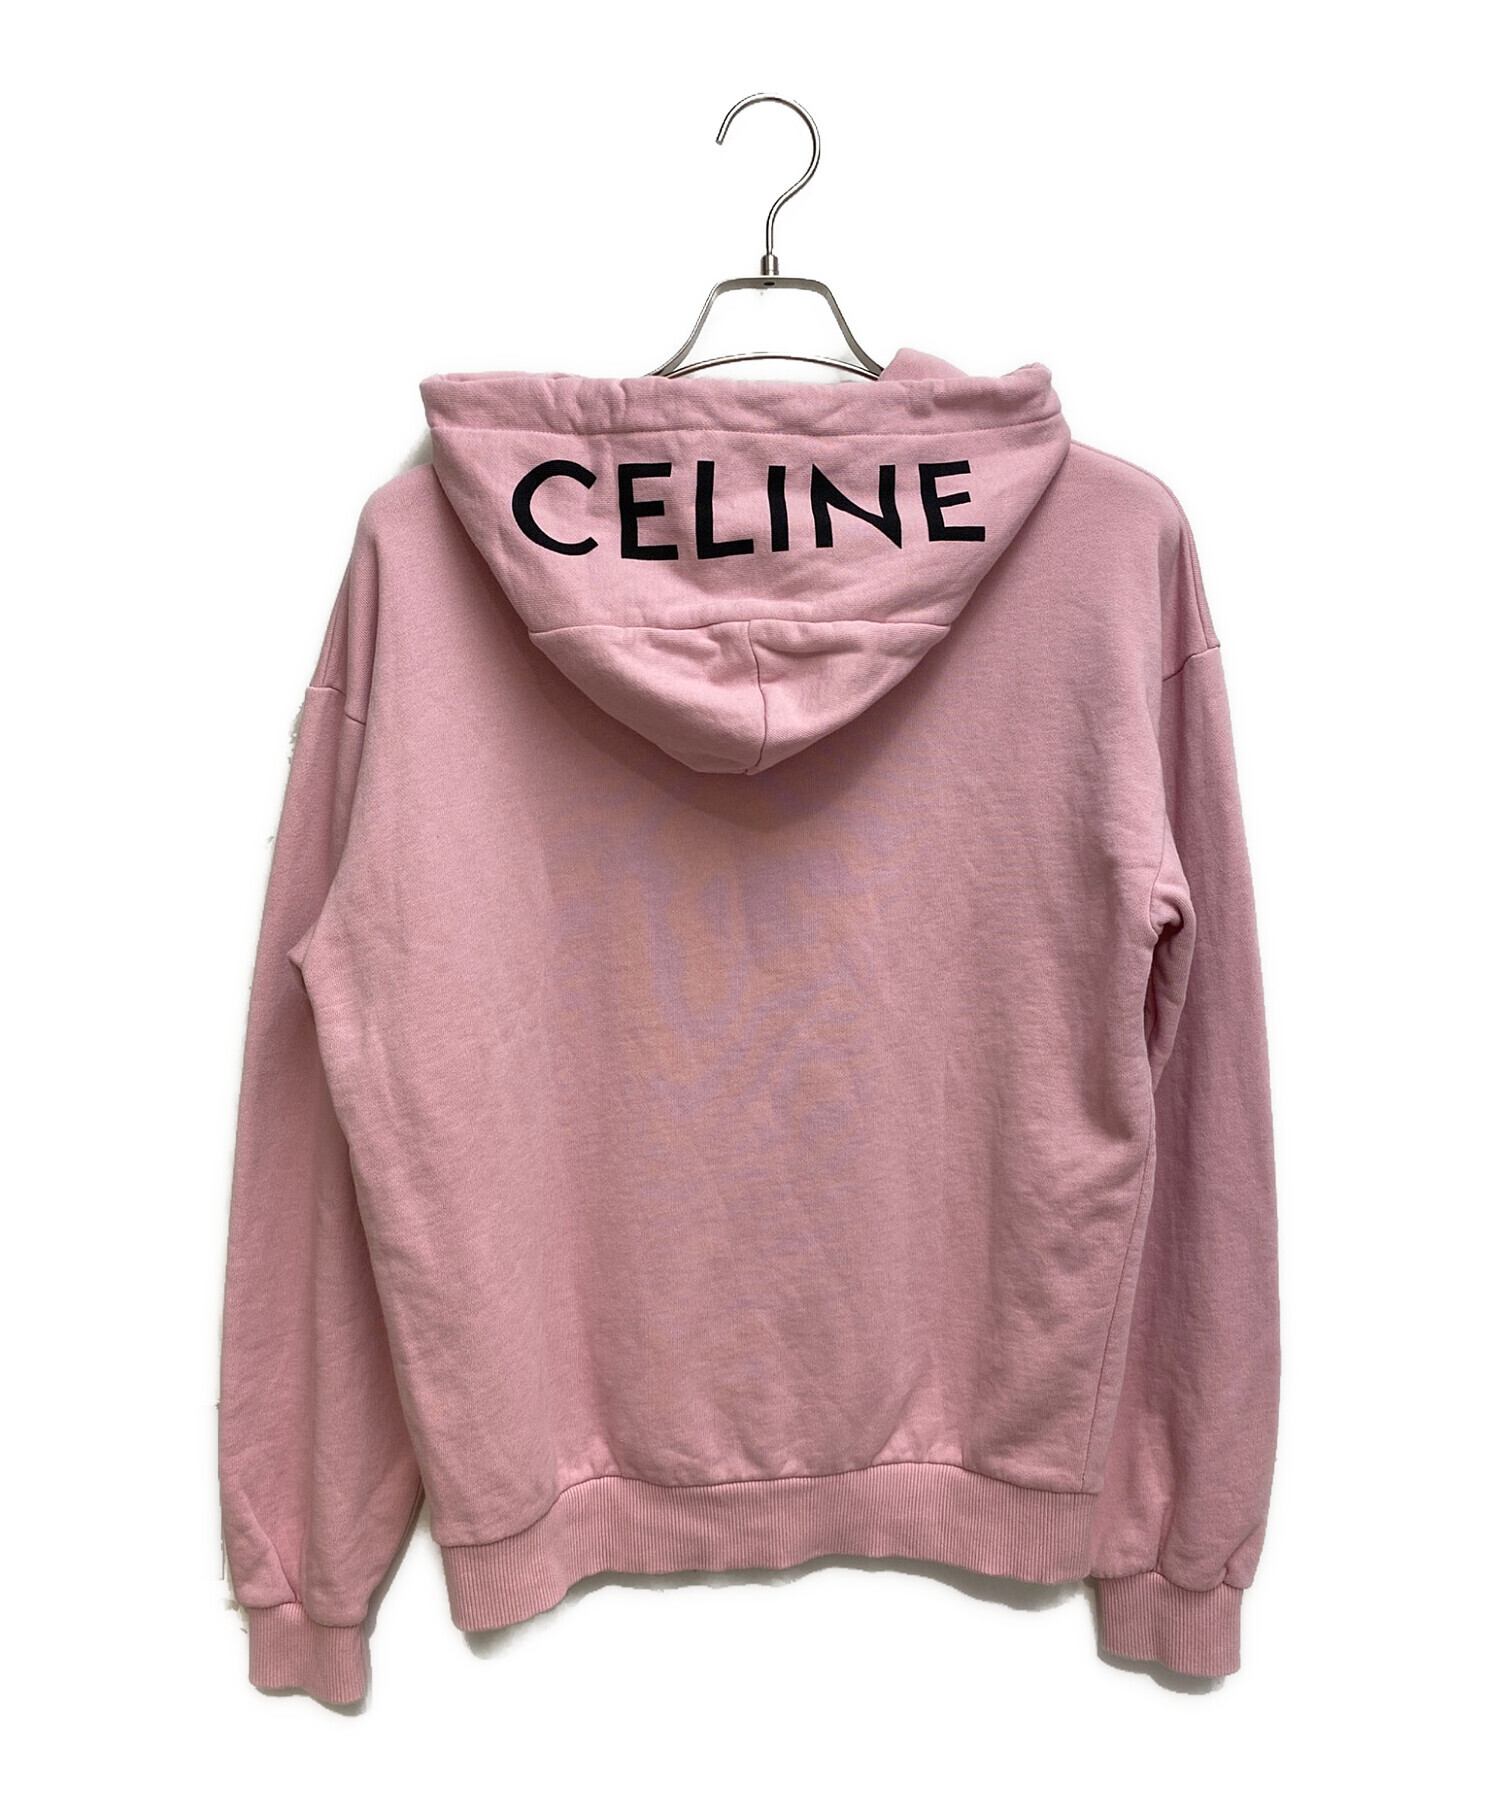 CELINE (セリーヌ) プリントロゴパーカー ピンク サイズ:XS